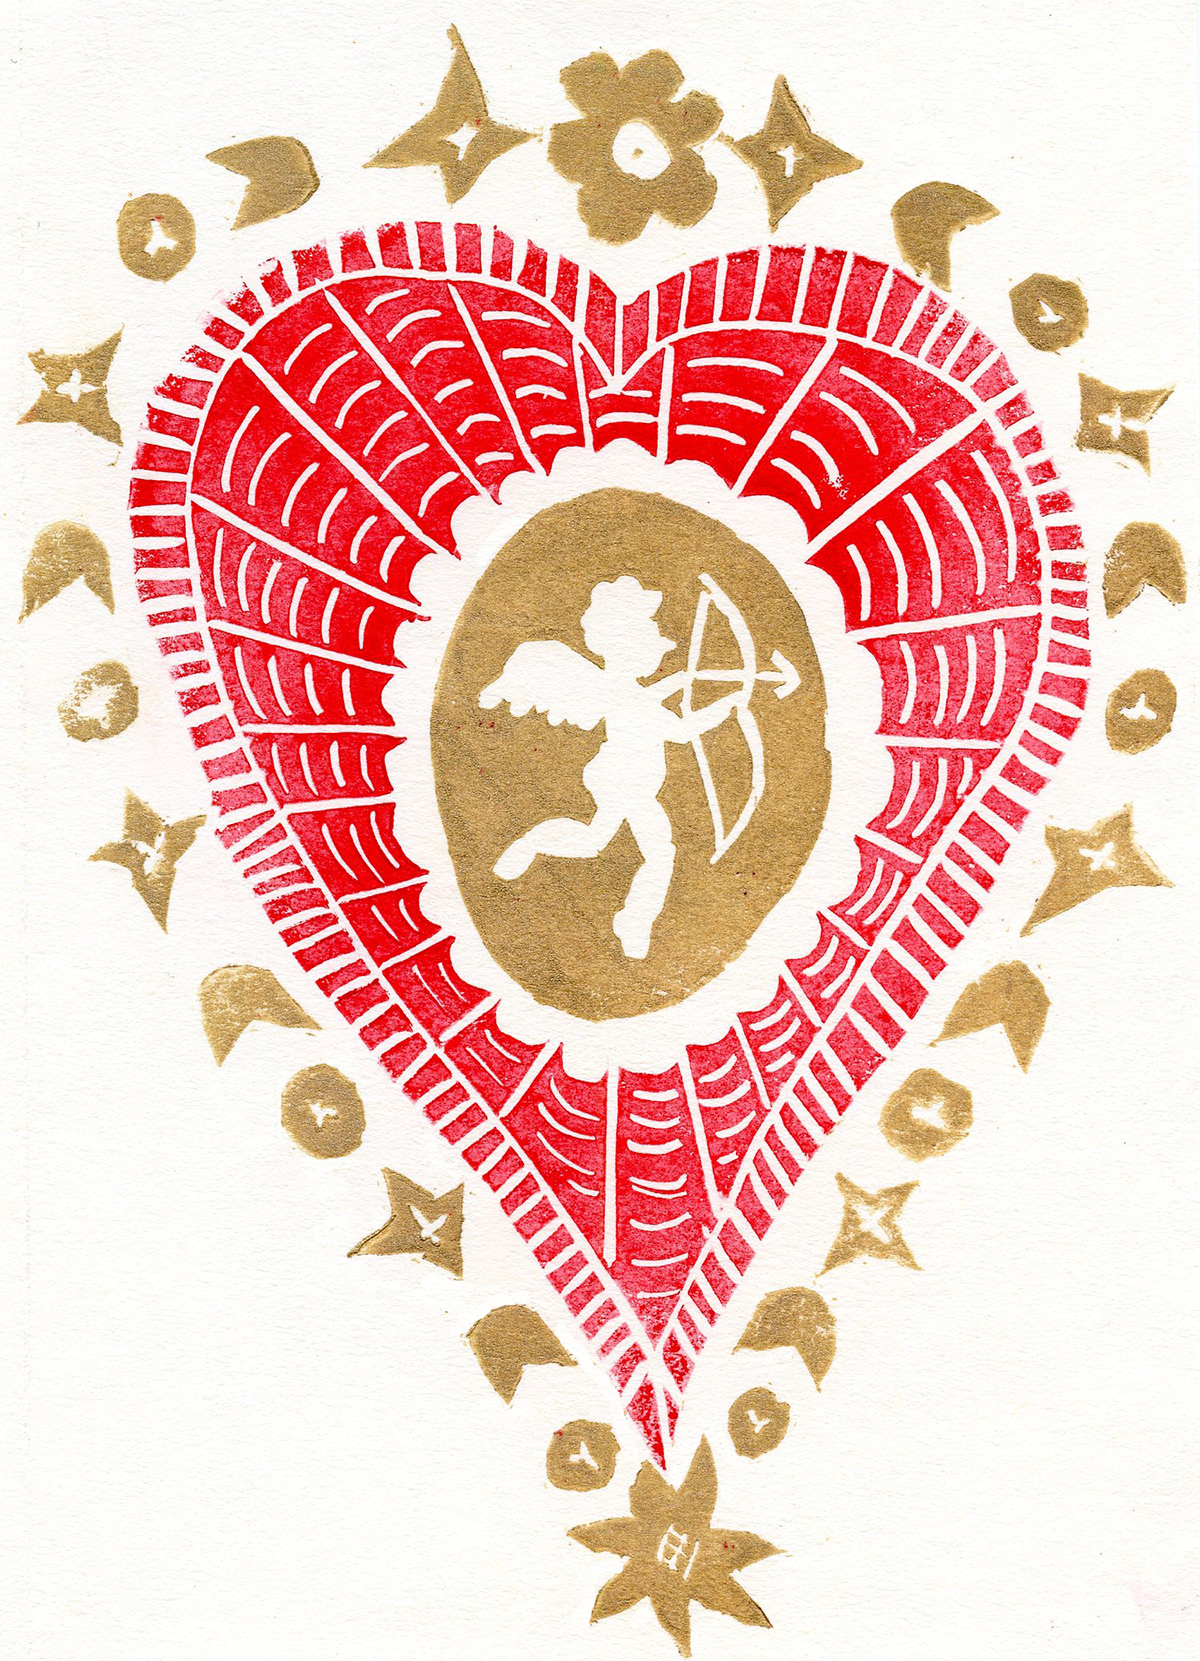 woodcut relief printing printmaking multi-color Reductive printing scroll saw linoleum cuckoo clock Red riding hood hansel and gretel valentine crafting handmade fairy tale